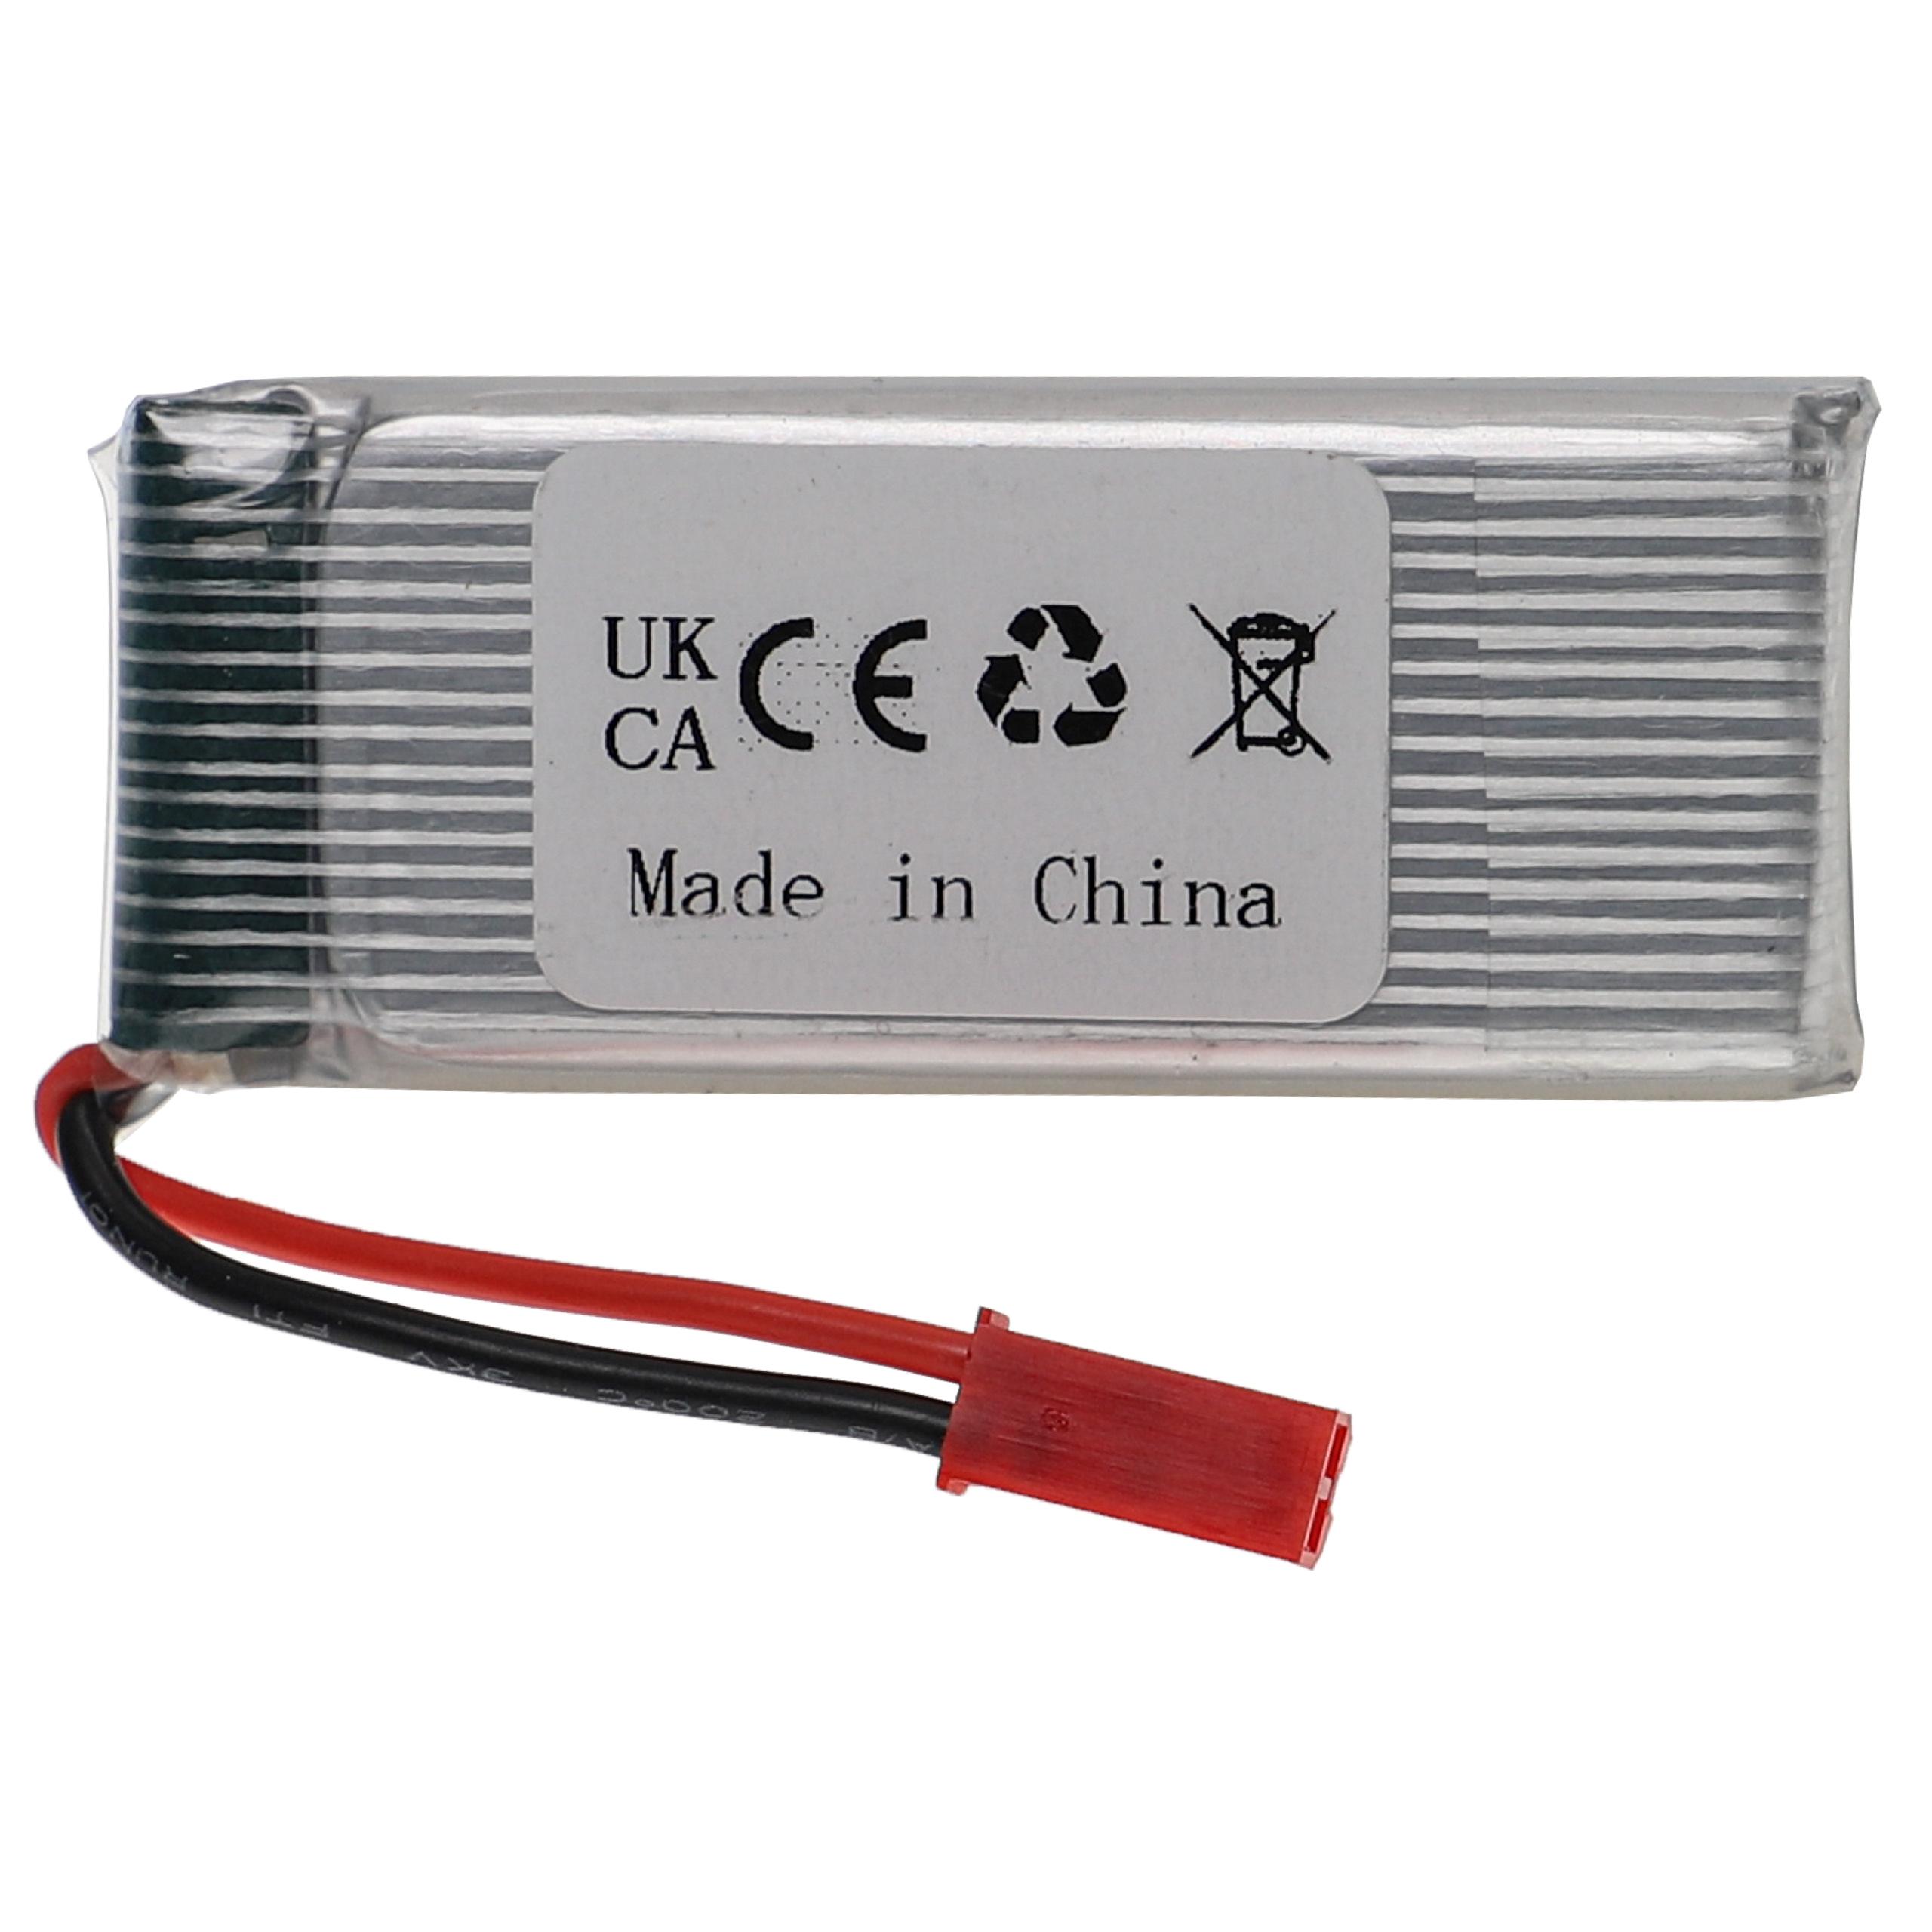 Akumulator do modeli zdalnie sterowanych RC - 900 mAh 3,7 V LiPo, BEC